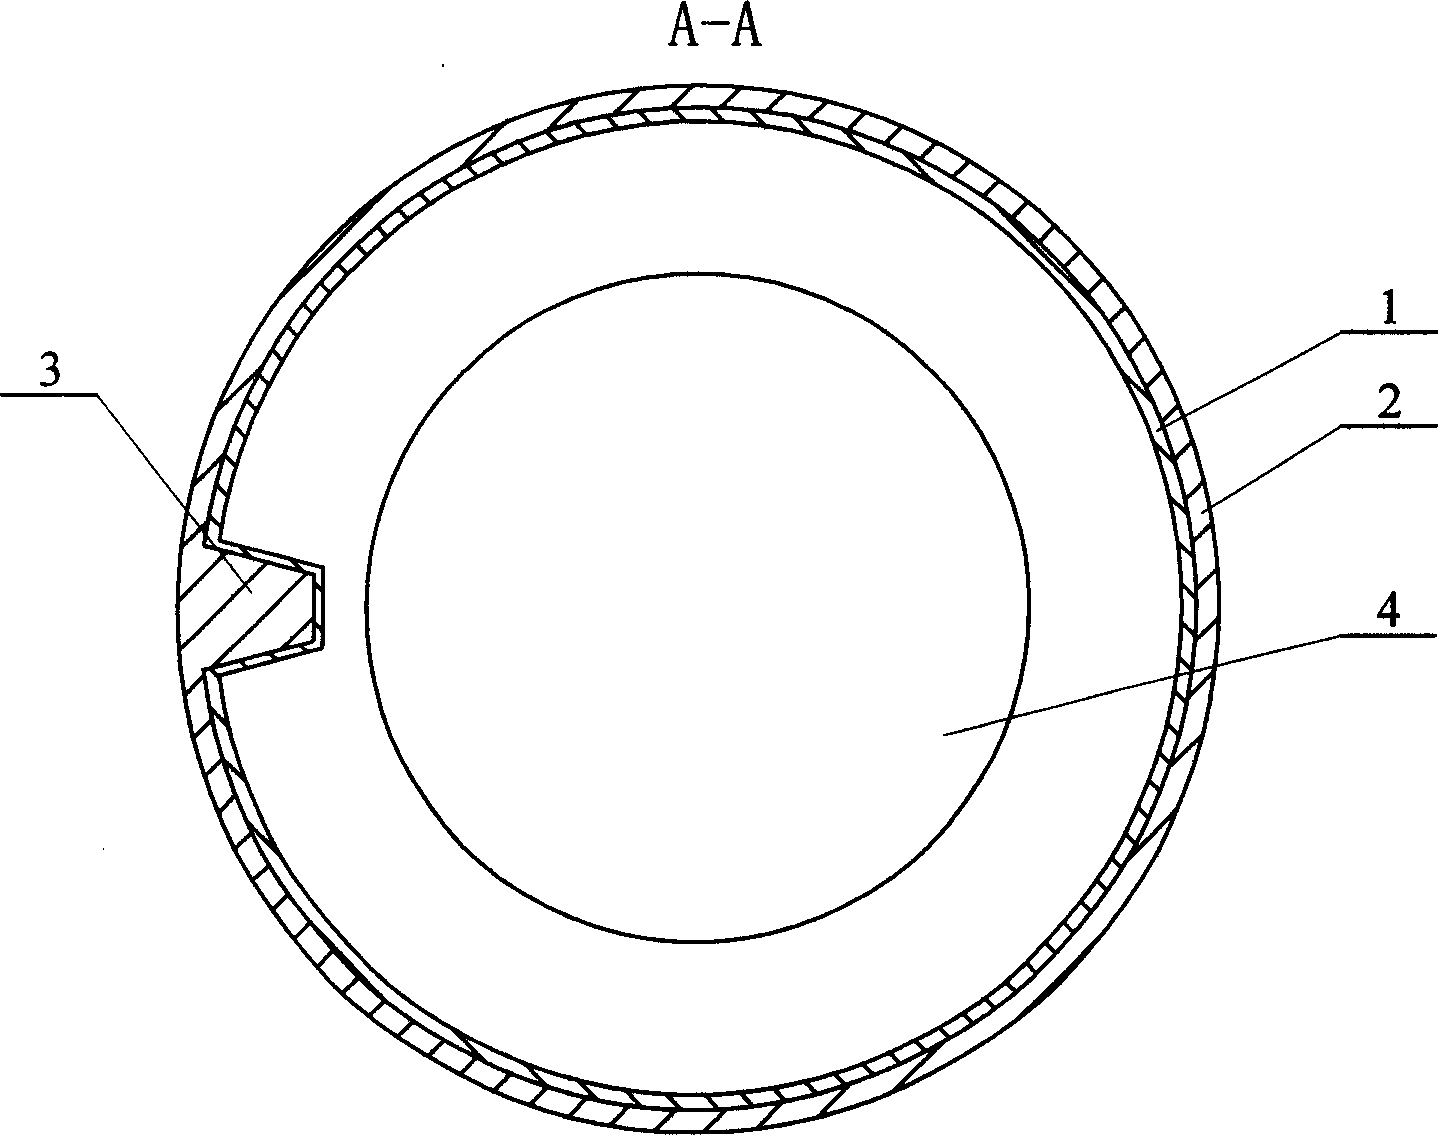 Fiber reinforced plastic cylinder with interior spiral reinforcing bar and method for manufacturing the same